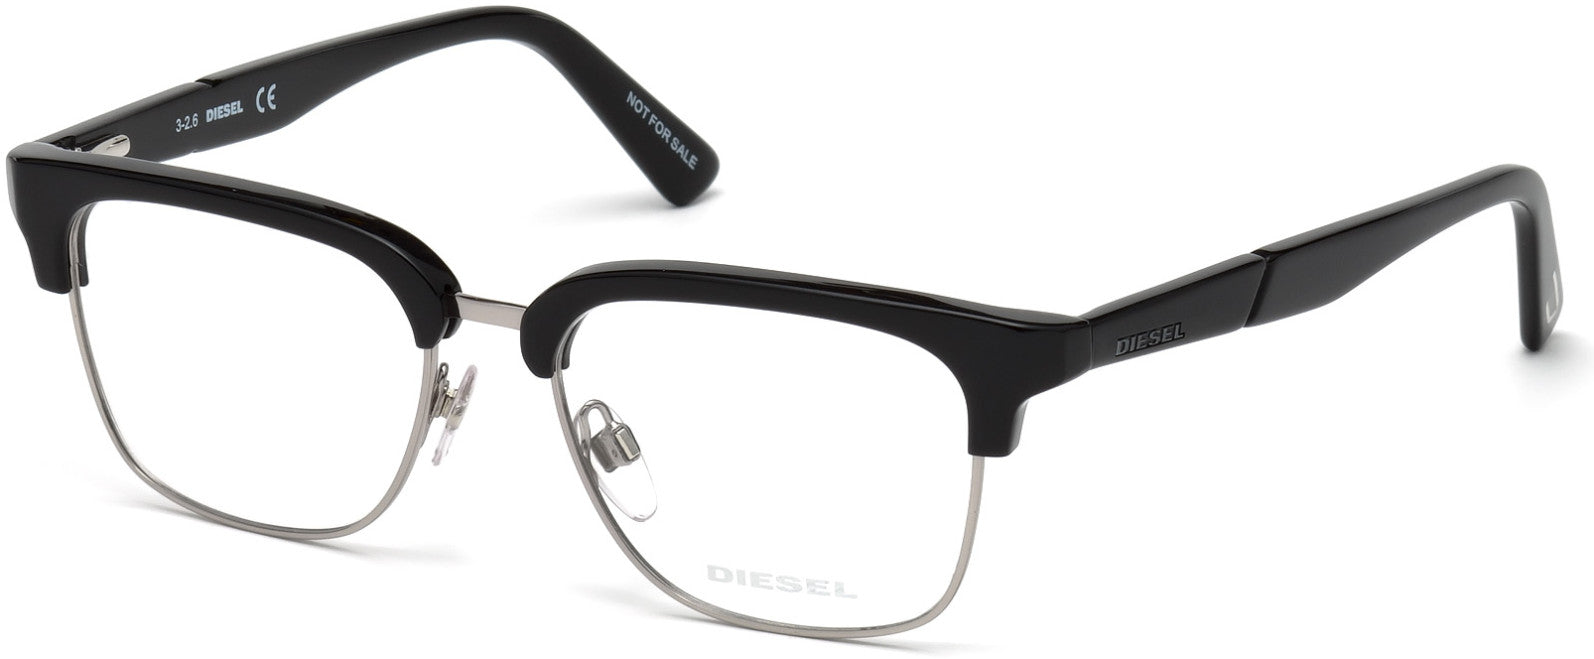 Diesel DL5247 Geometric Eyeglasses 001-001 - Shiny Black